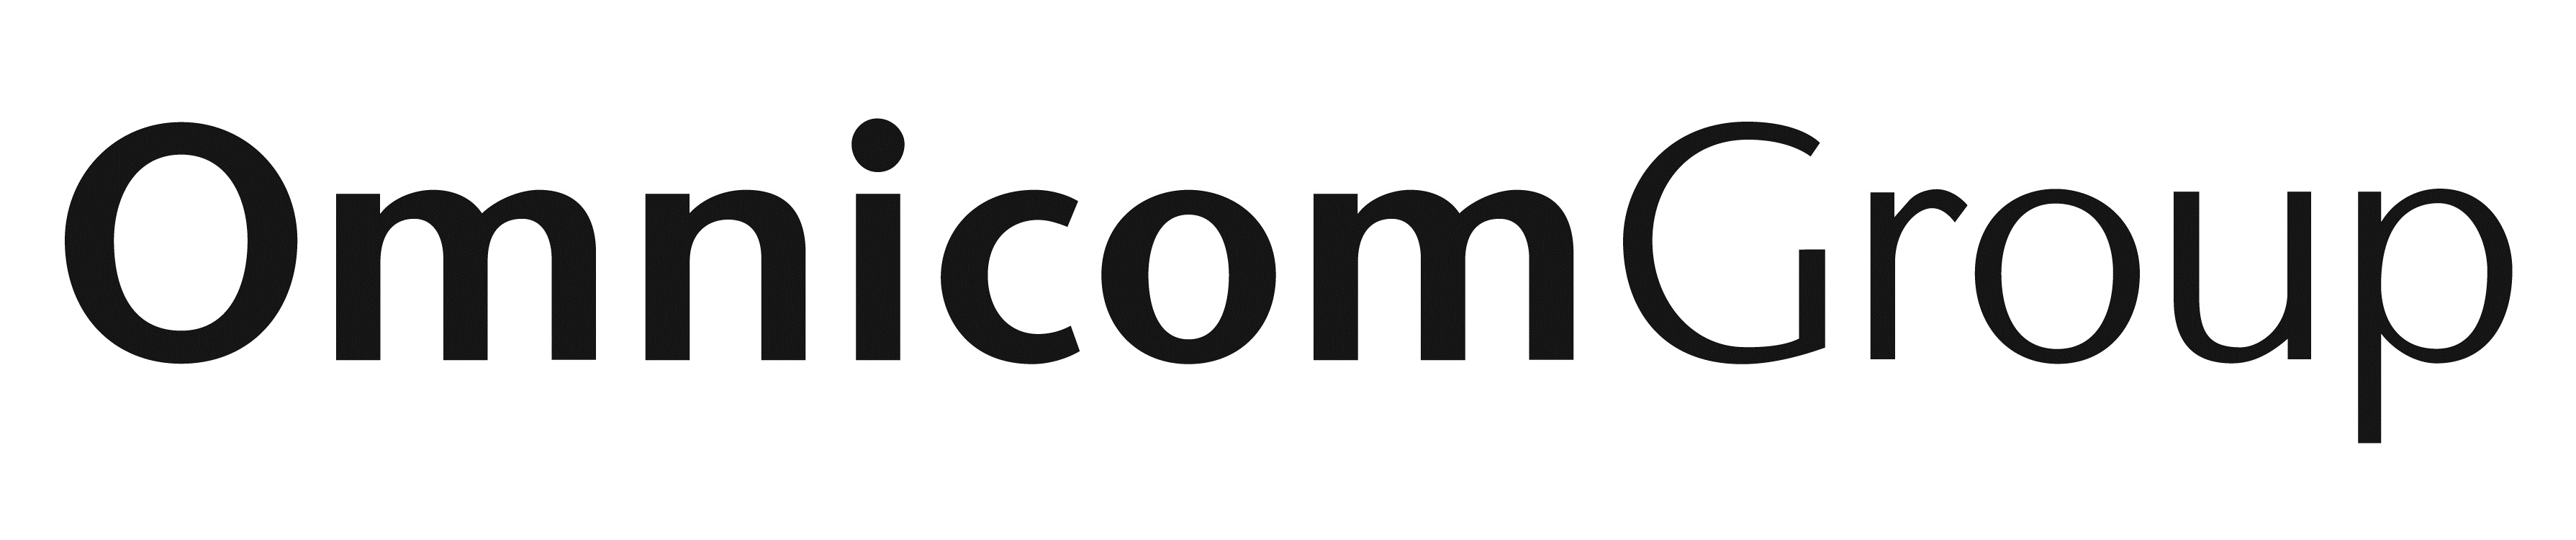 File:Omnicom Group Logo.png, Omnicom Group Logo Vector PNG - Free PNG